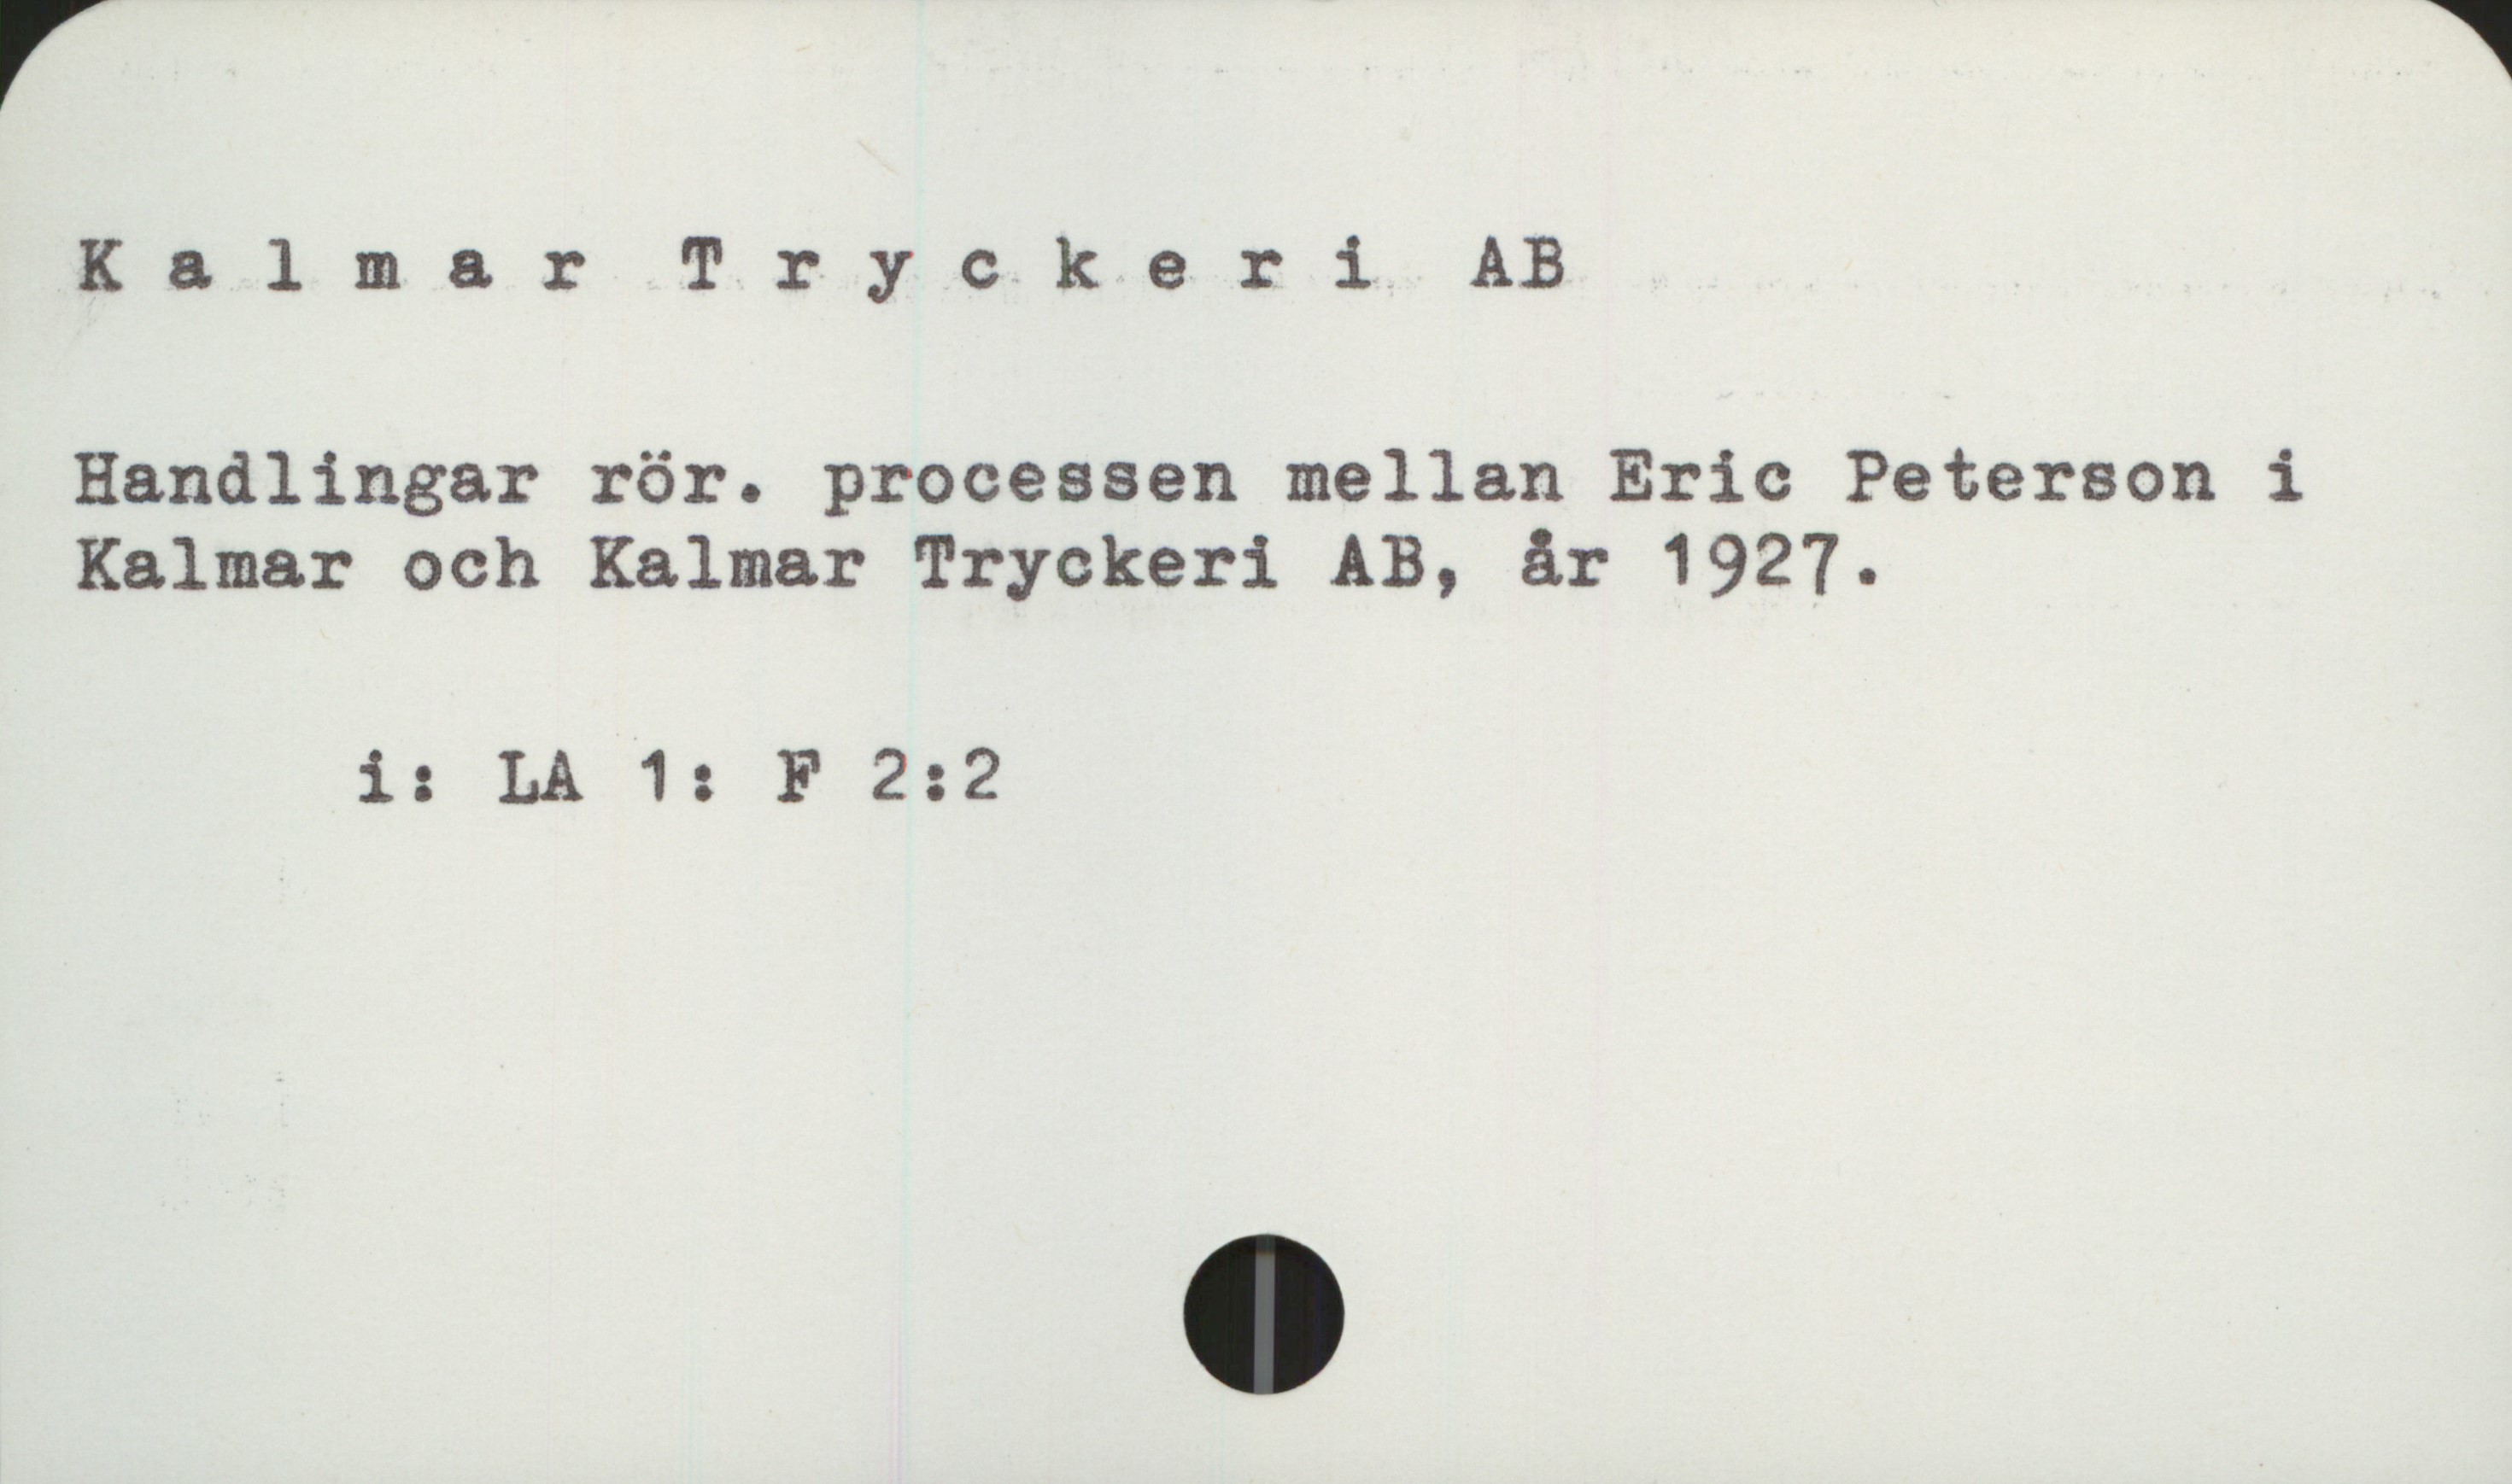  Kalmar Tryckeri AB
Handlingar rör. processen mellan Eric Peterson i
Kalmar och Kalmar Tryckeri AB, år 1927.

i: LA 1; F 2:2

